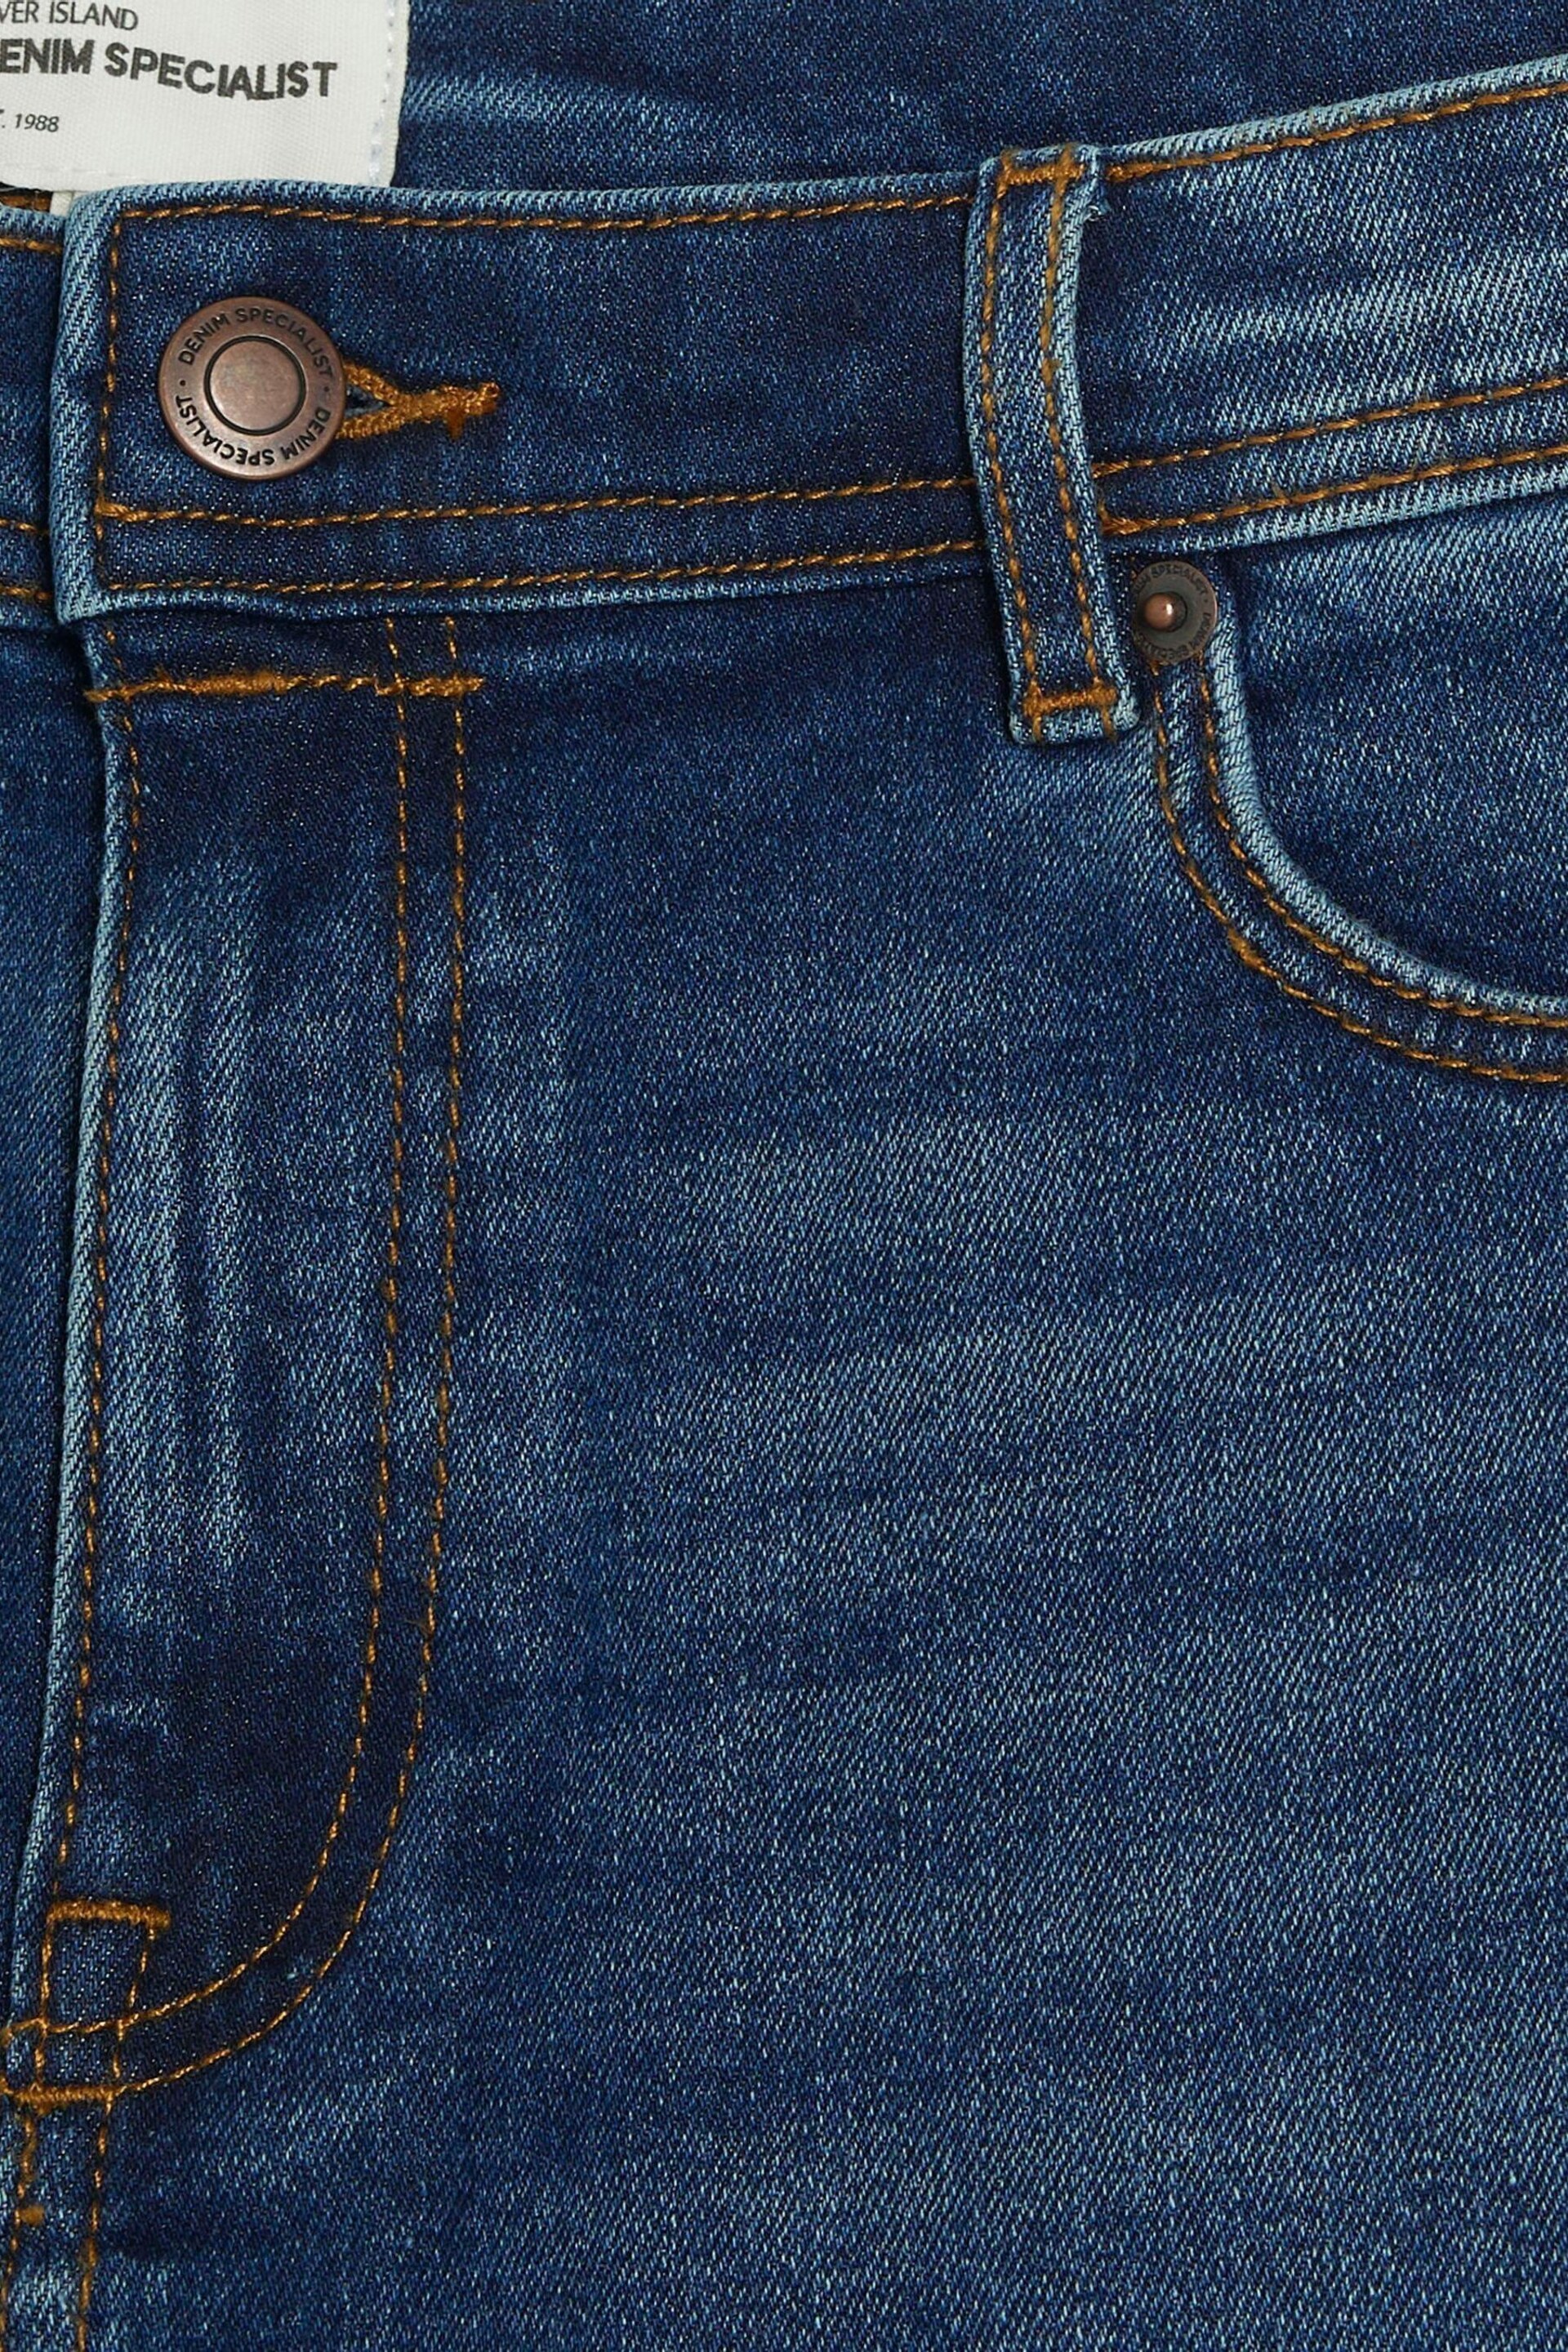 River Island Blue Medium Wash Skinny Jeans - Image 6 of 6